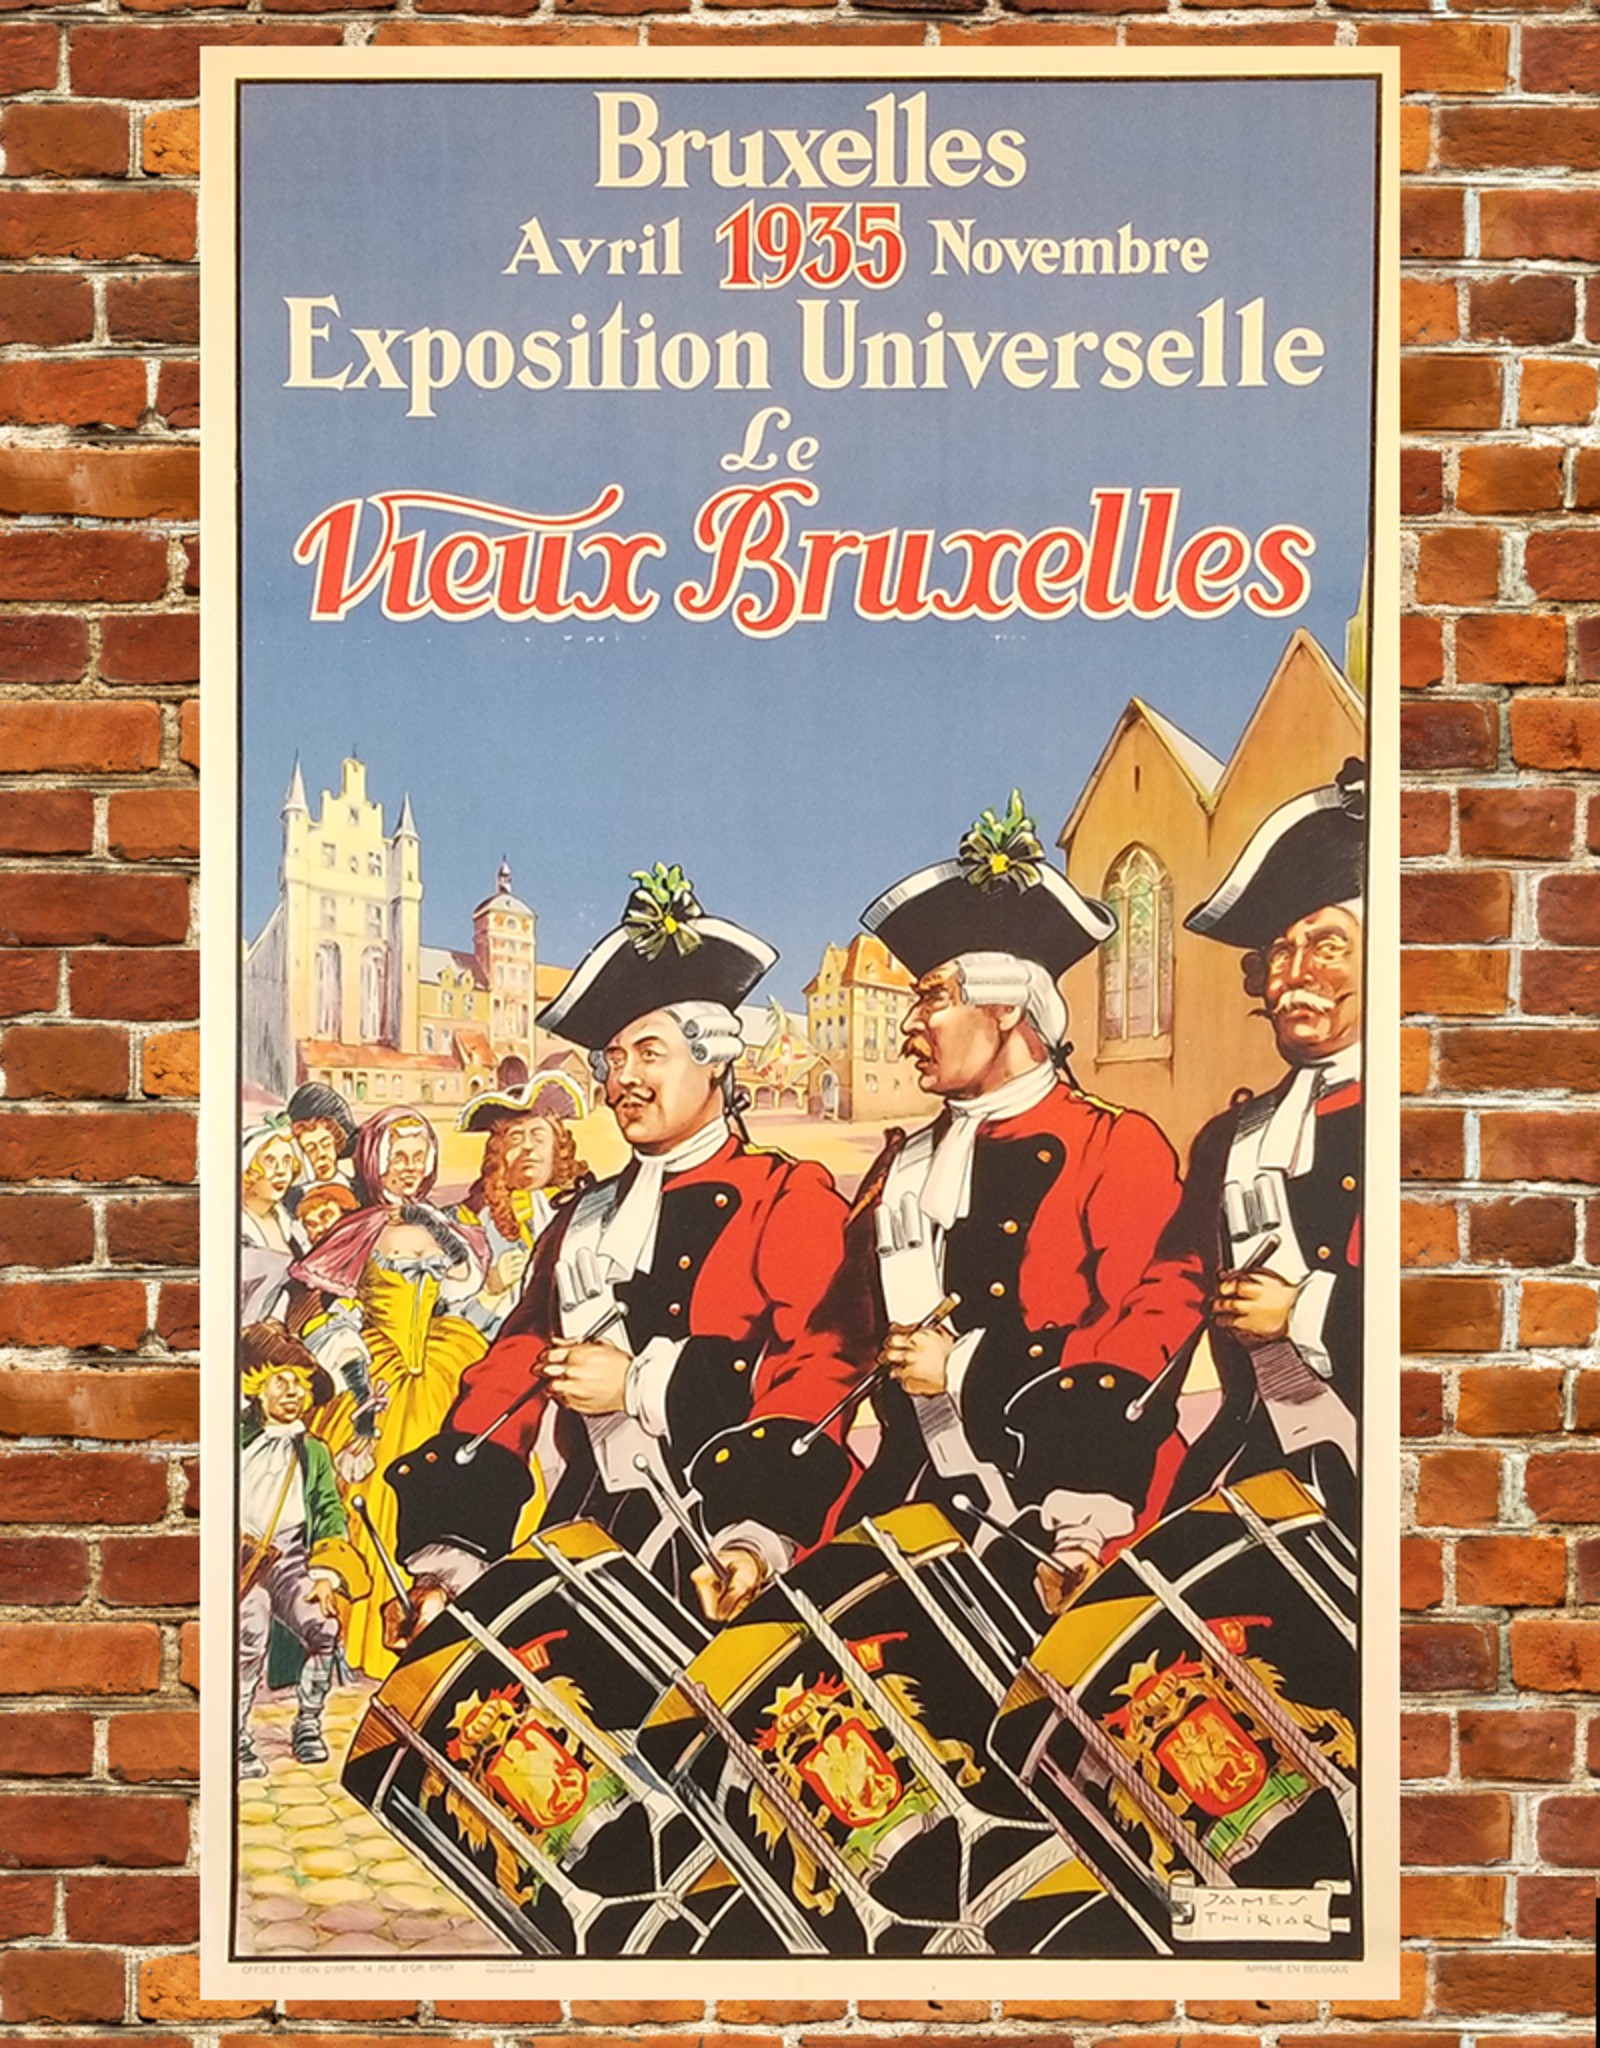 SPV Bruxelles Exposition Universelle Lithograph Poster